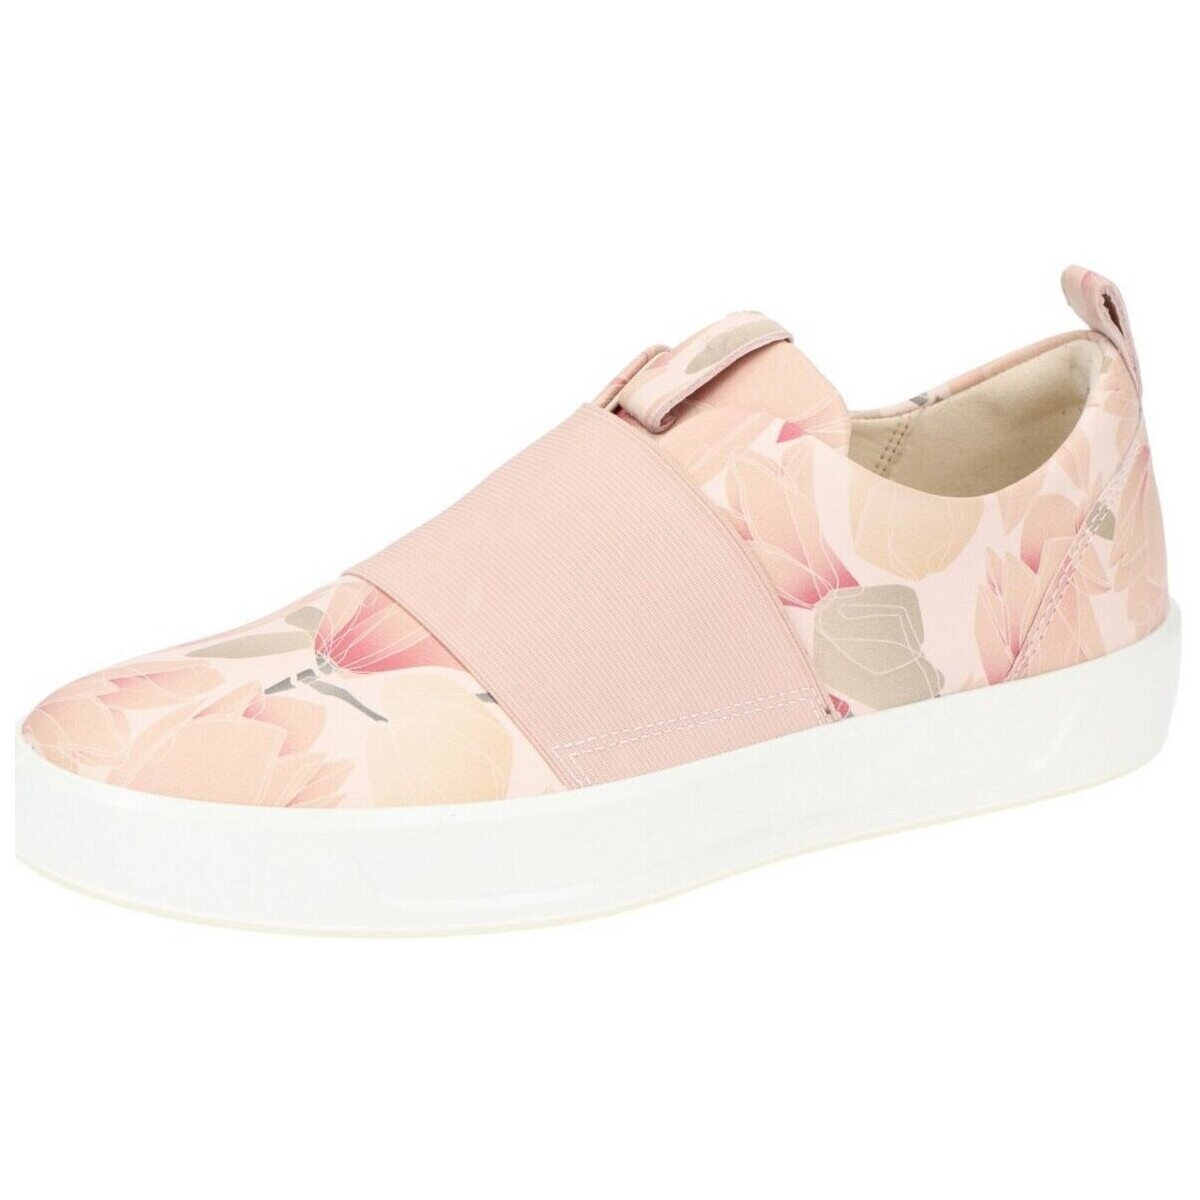 Schuhe Damen Slipper Ecco Slipper Soft 8 Ladies Schuhe rosa rose-dust 44096301118 Other